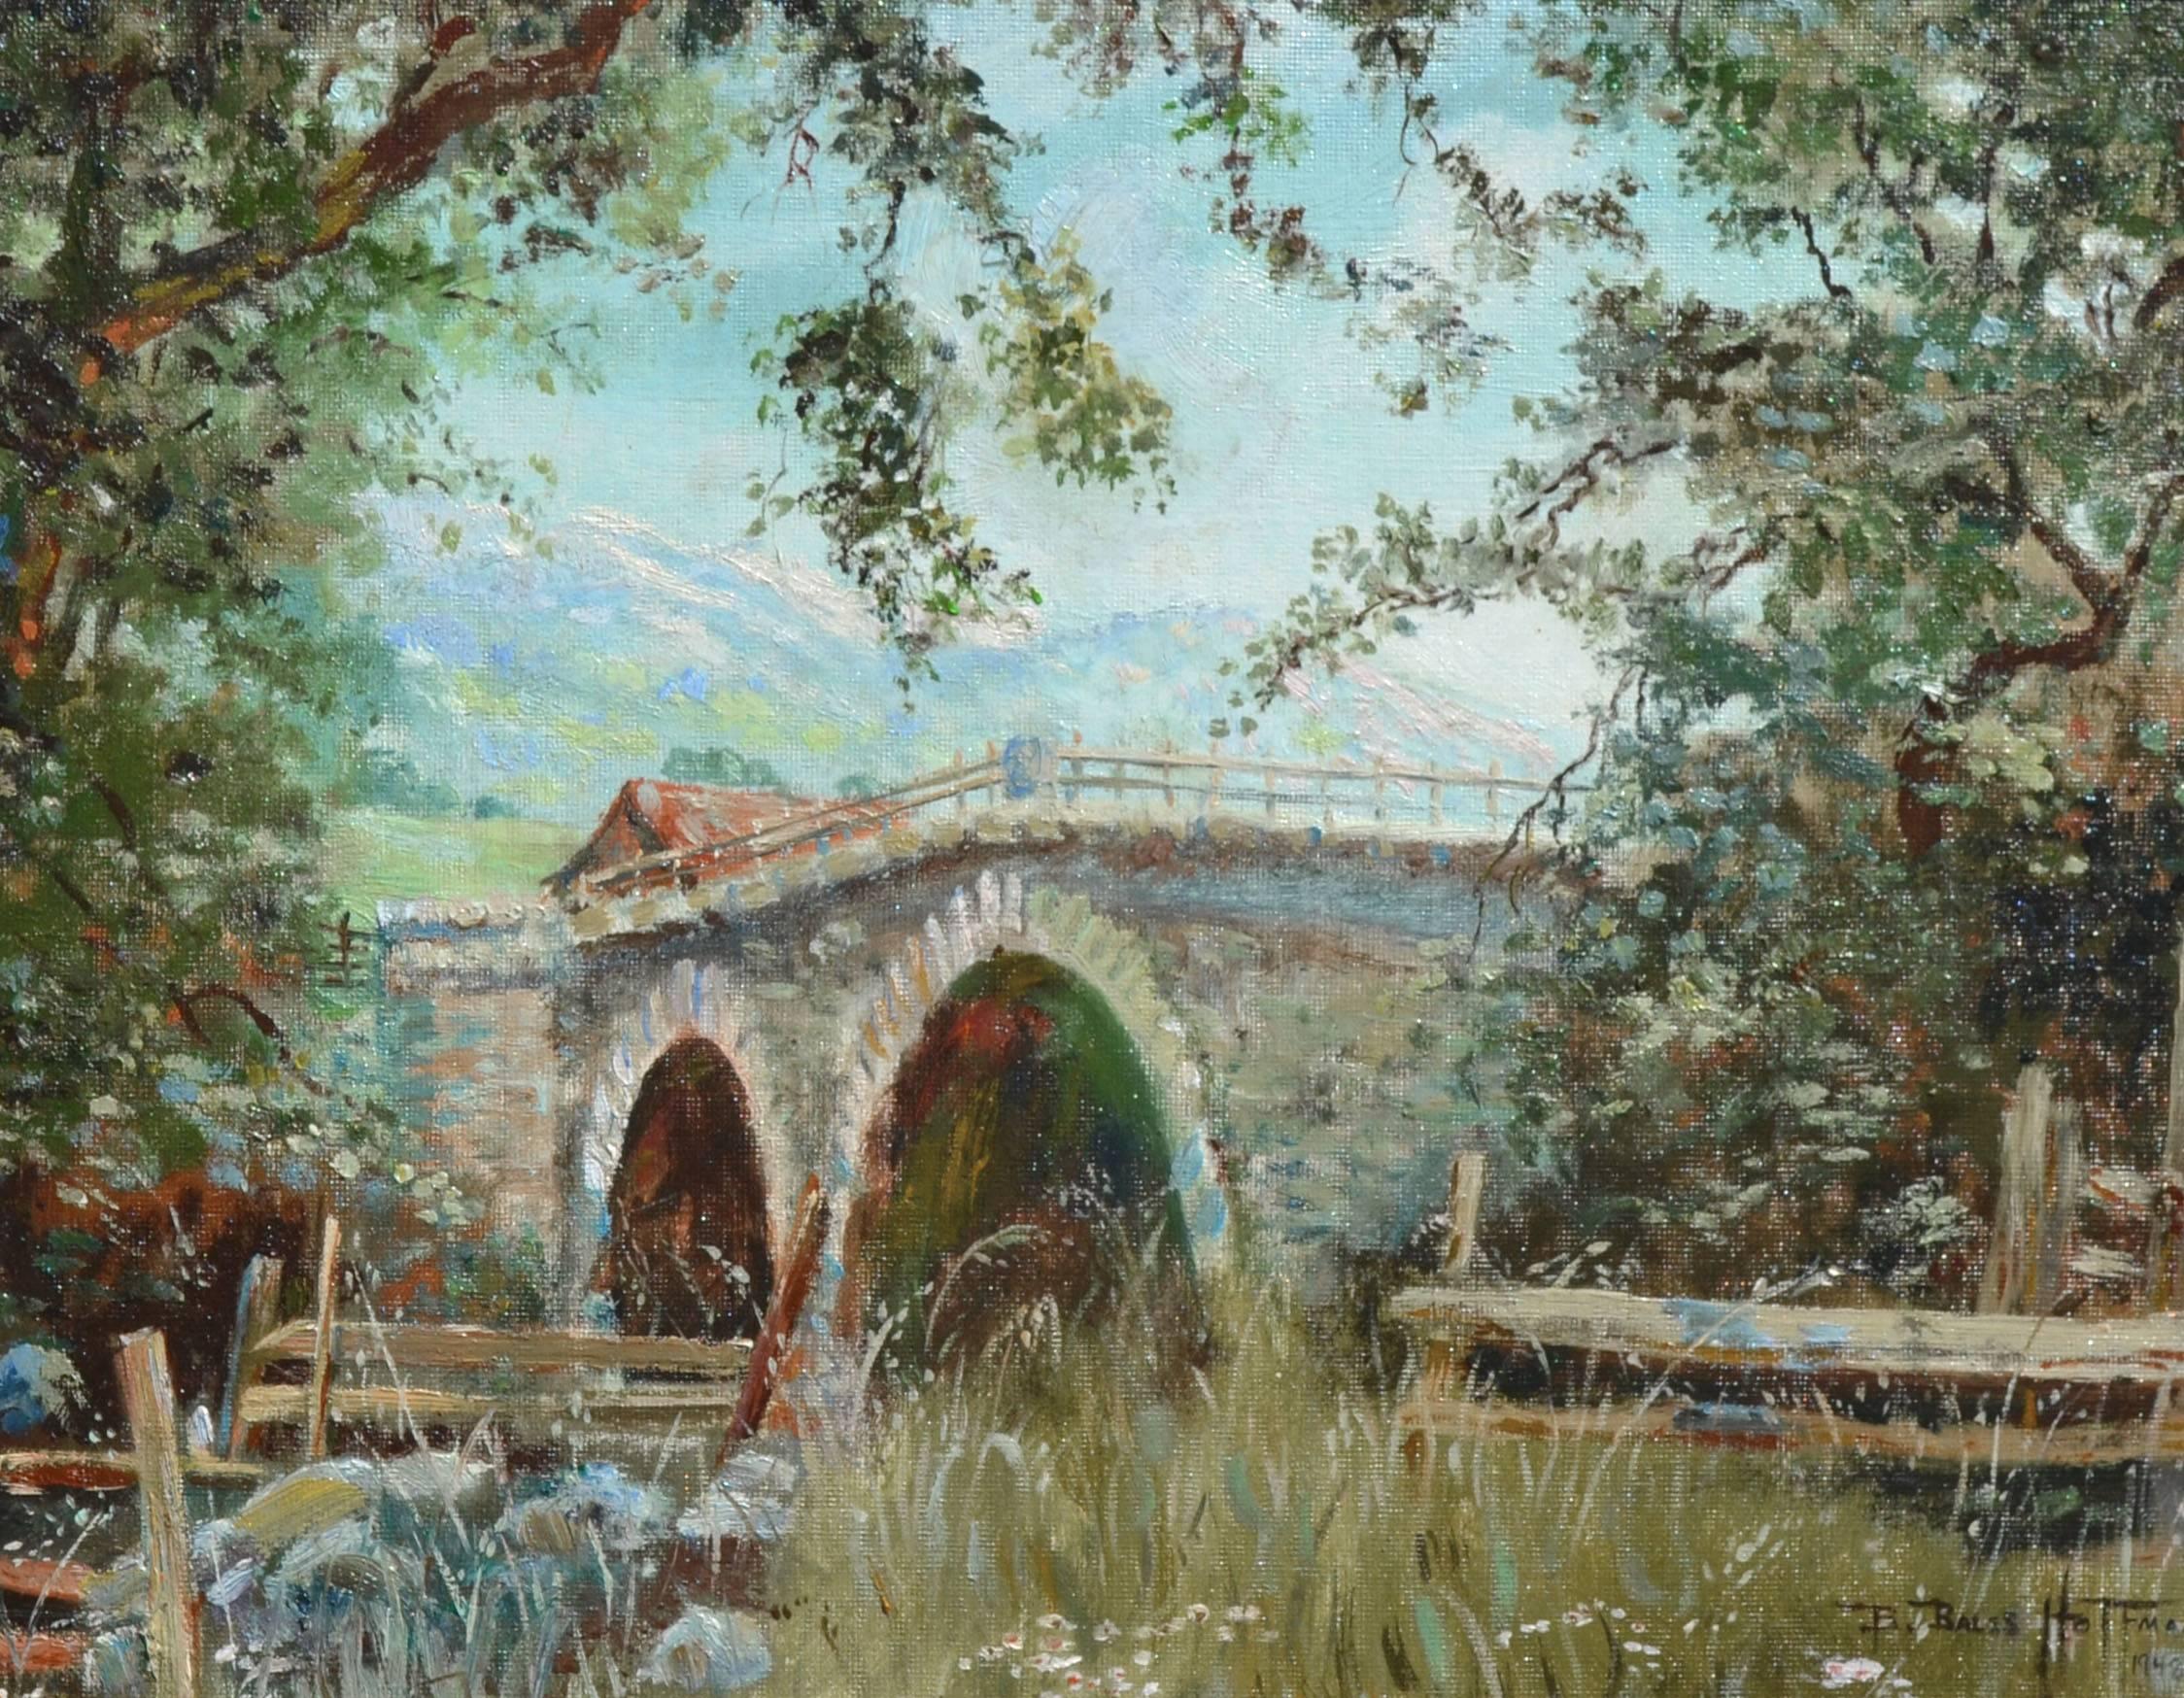 Old Napa Bridge, Mid-Century Monticello Stone Bridge Wine Country Landscape - Painting by Barbara Bales Hoffman